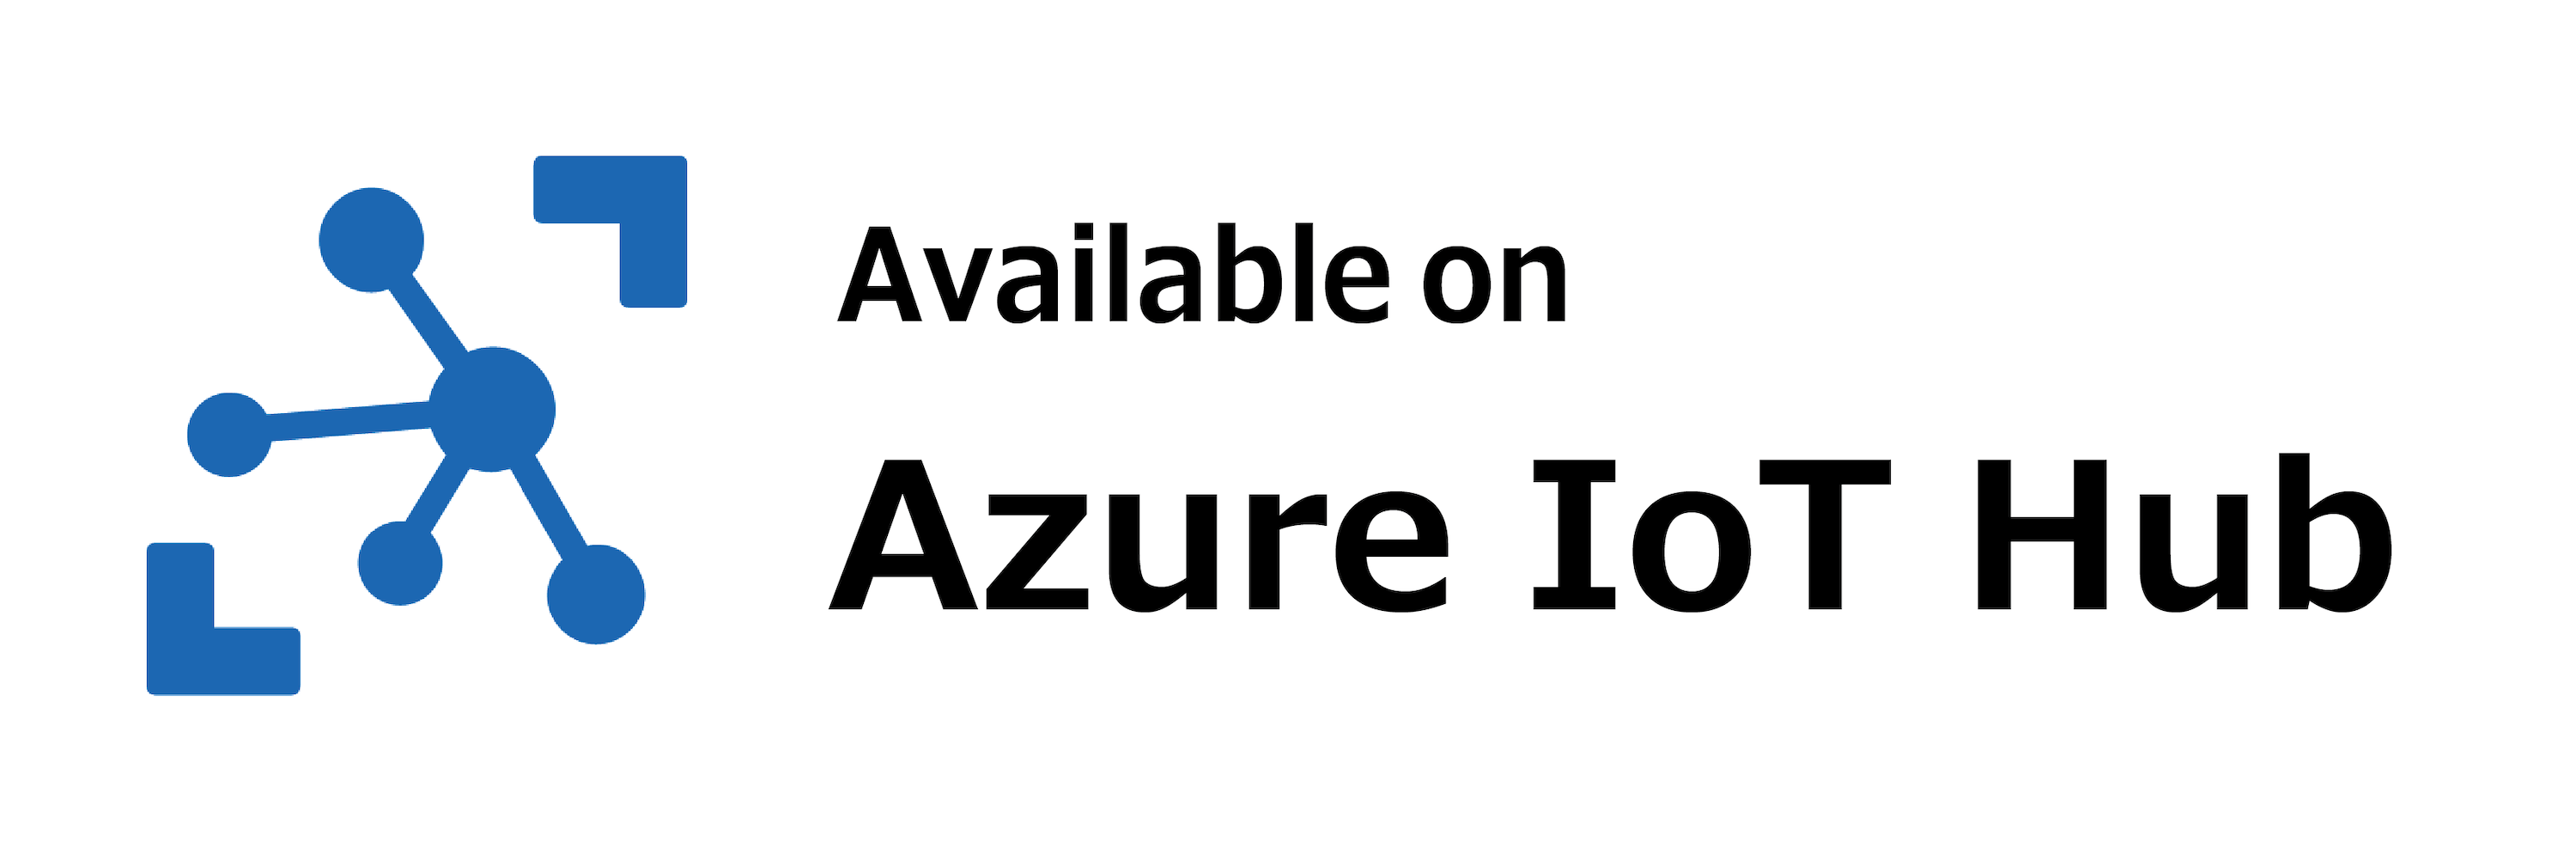 available on Azure IoT Hub